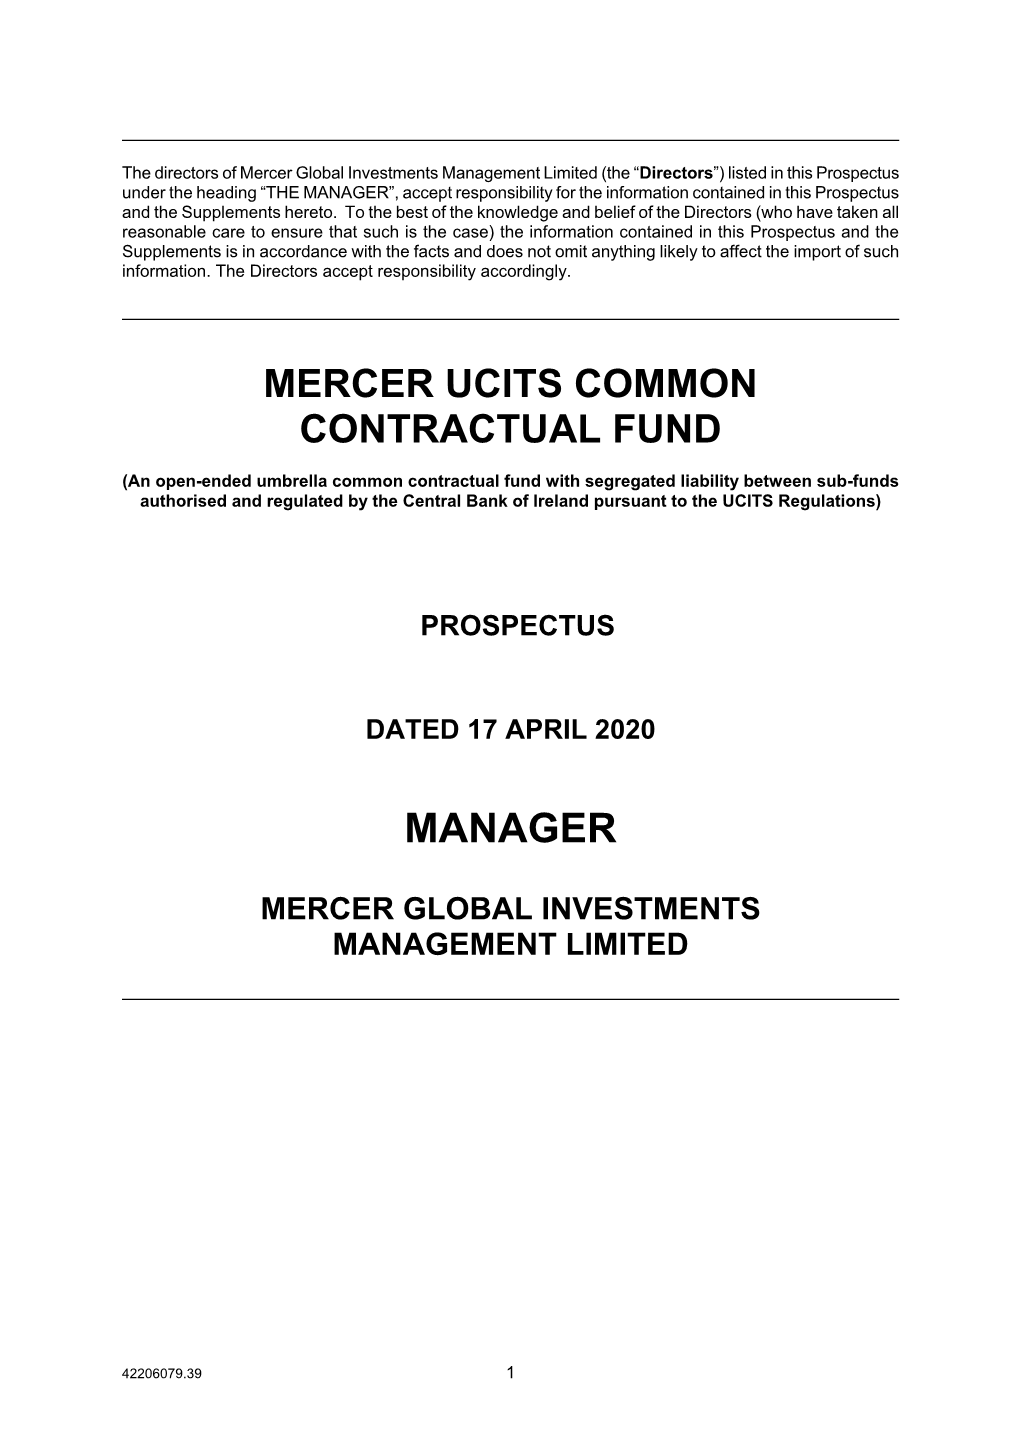 Prospectus Mercer UCITS Common Contractual Fund 17 April 2020